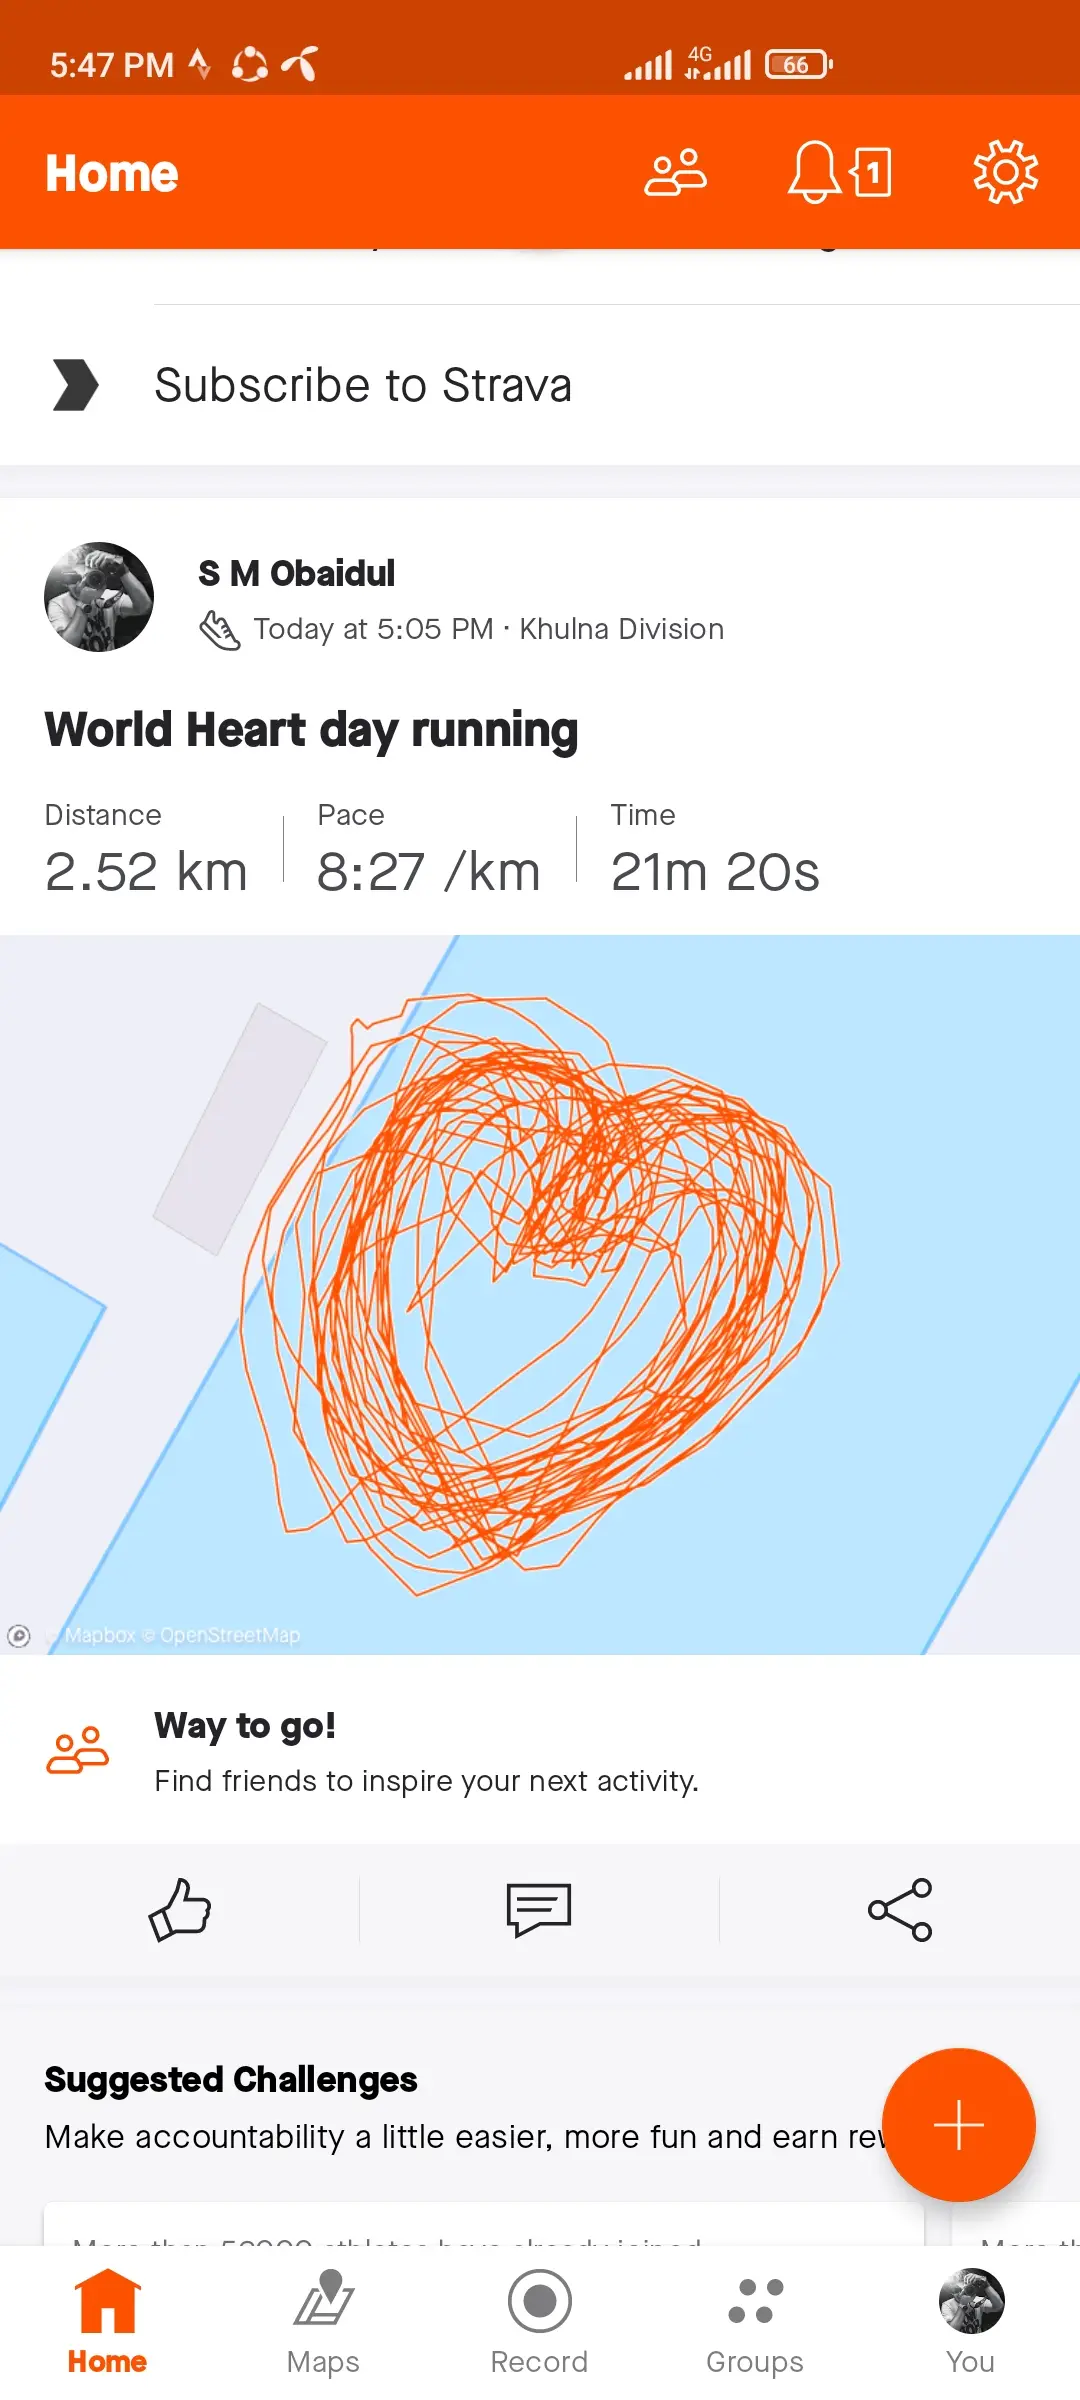 World Heart day running